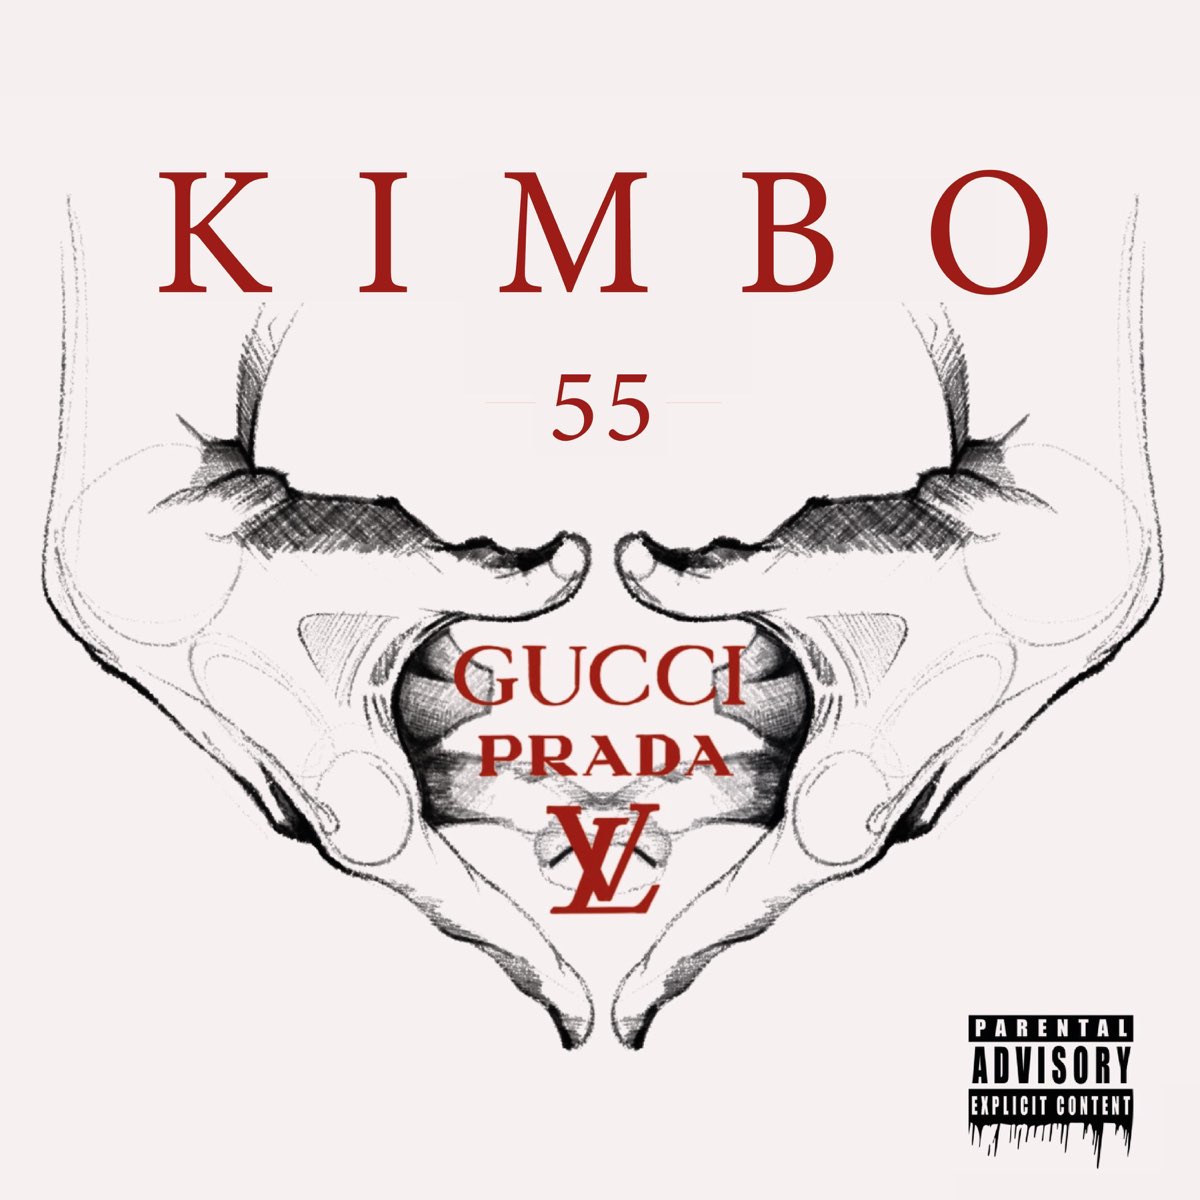 Gucci Prada LV - Single by Kimbo 55 on Apple Music